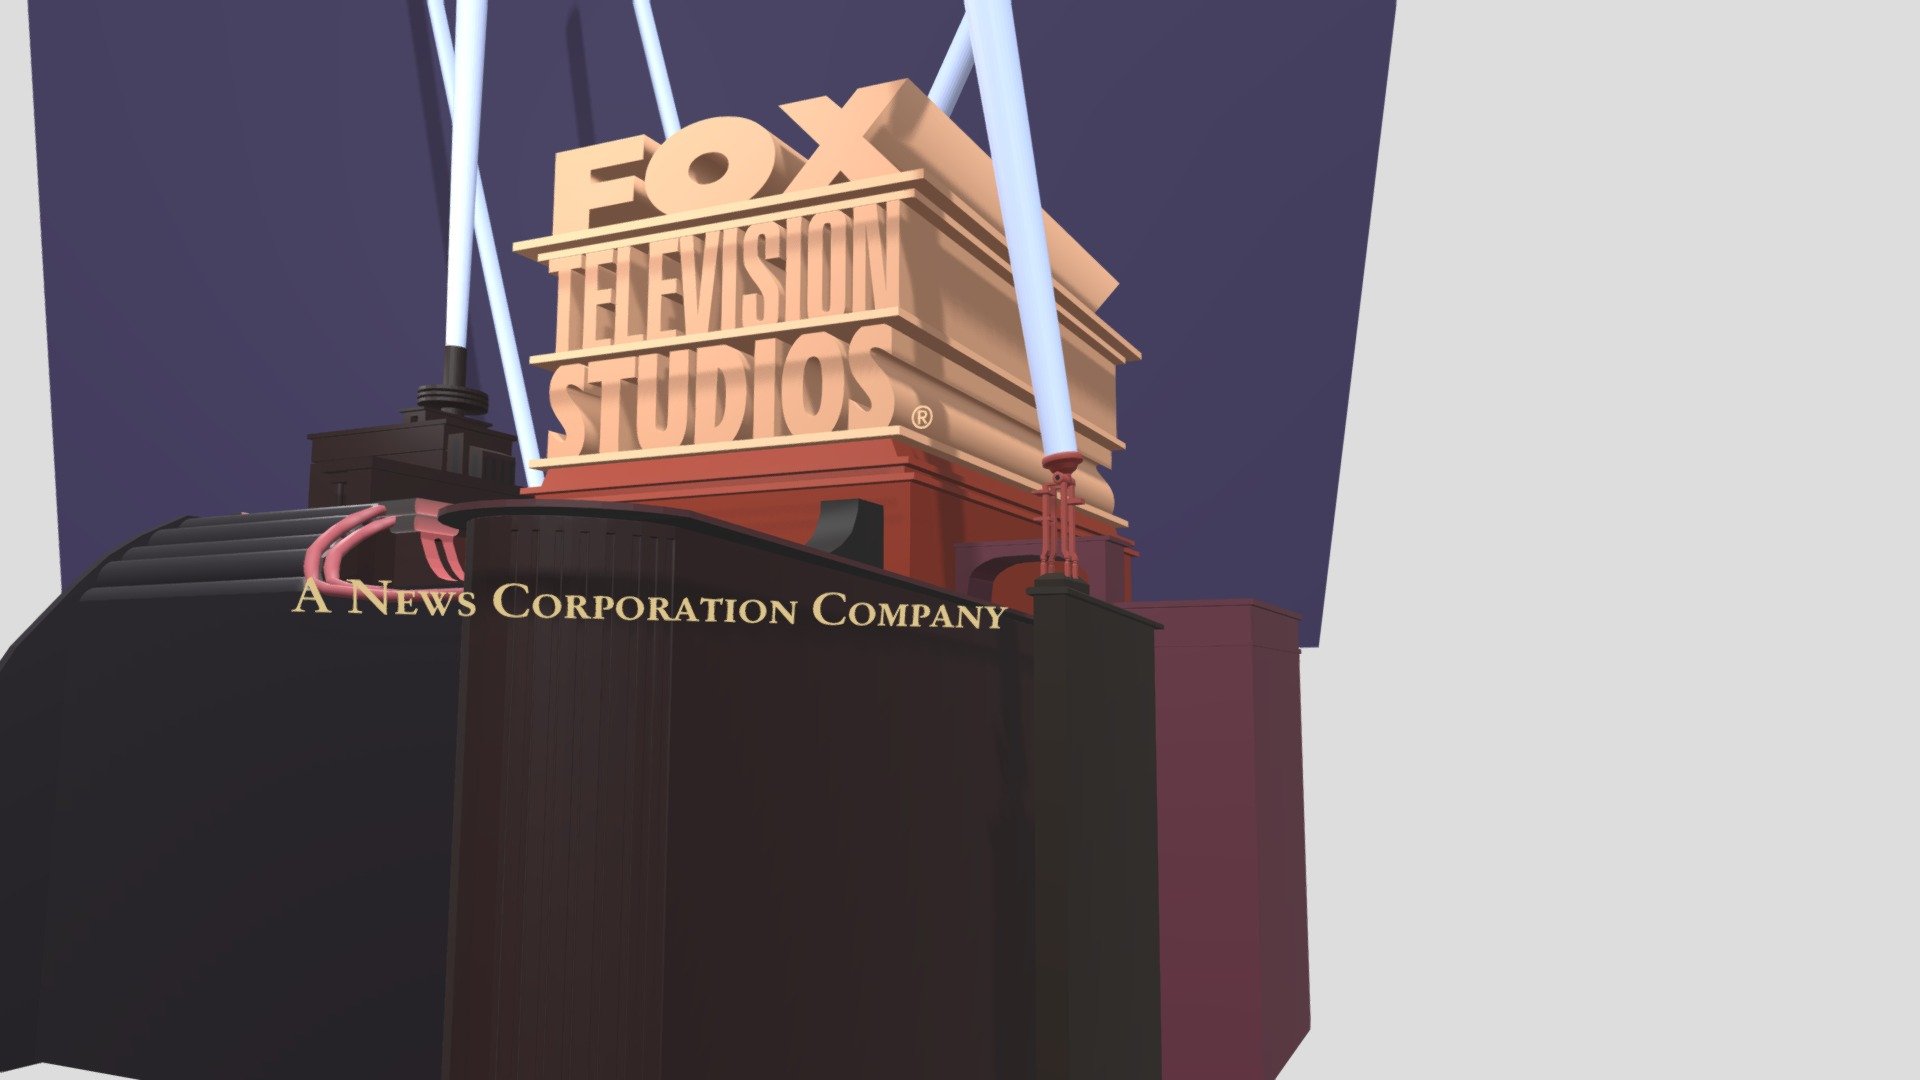 fox television studios